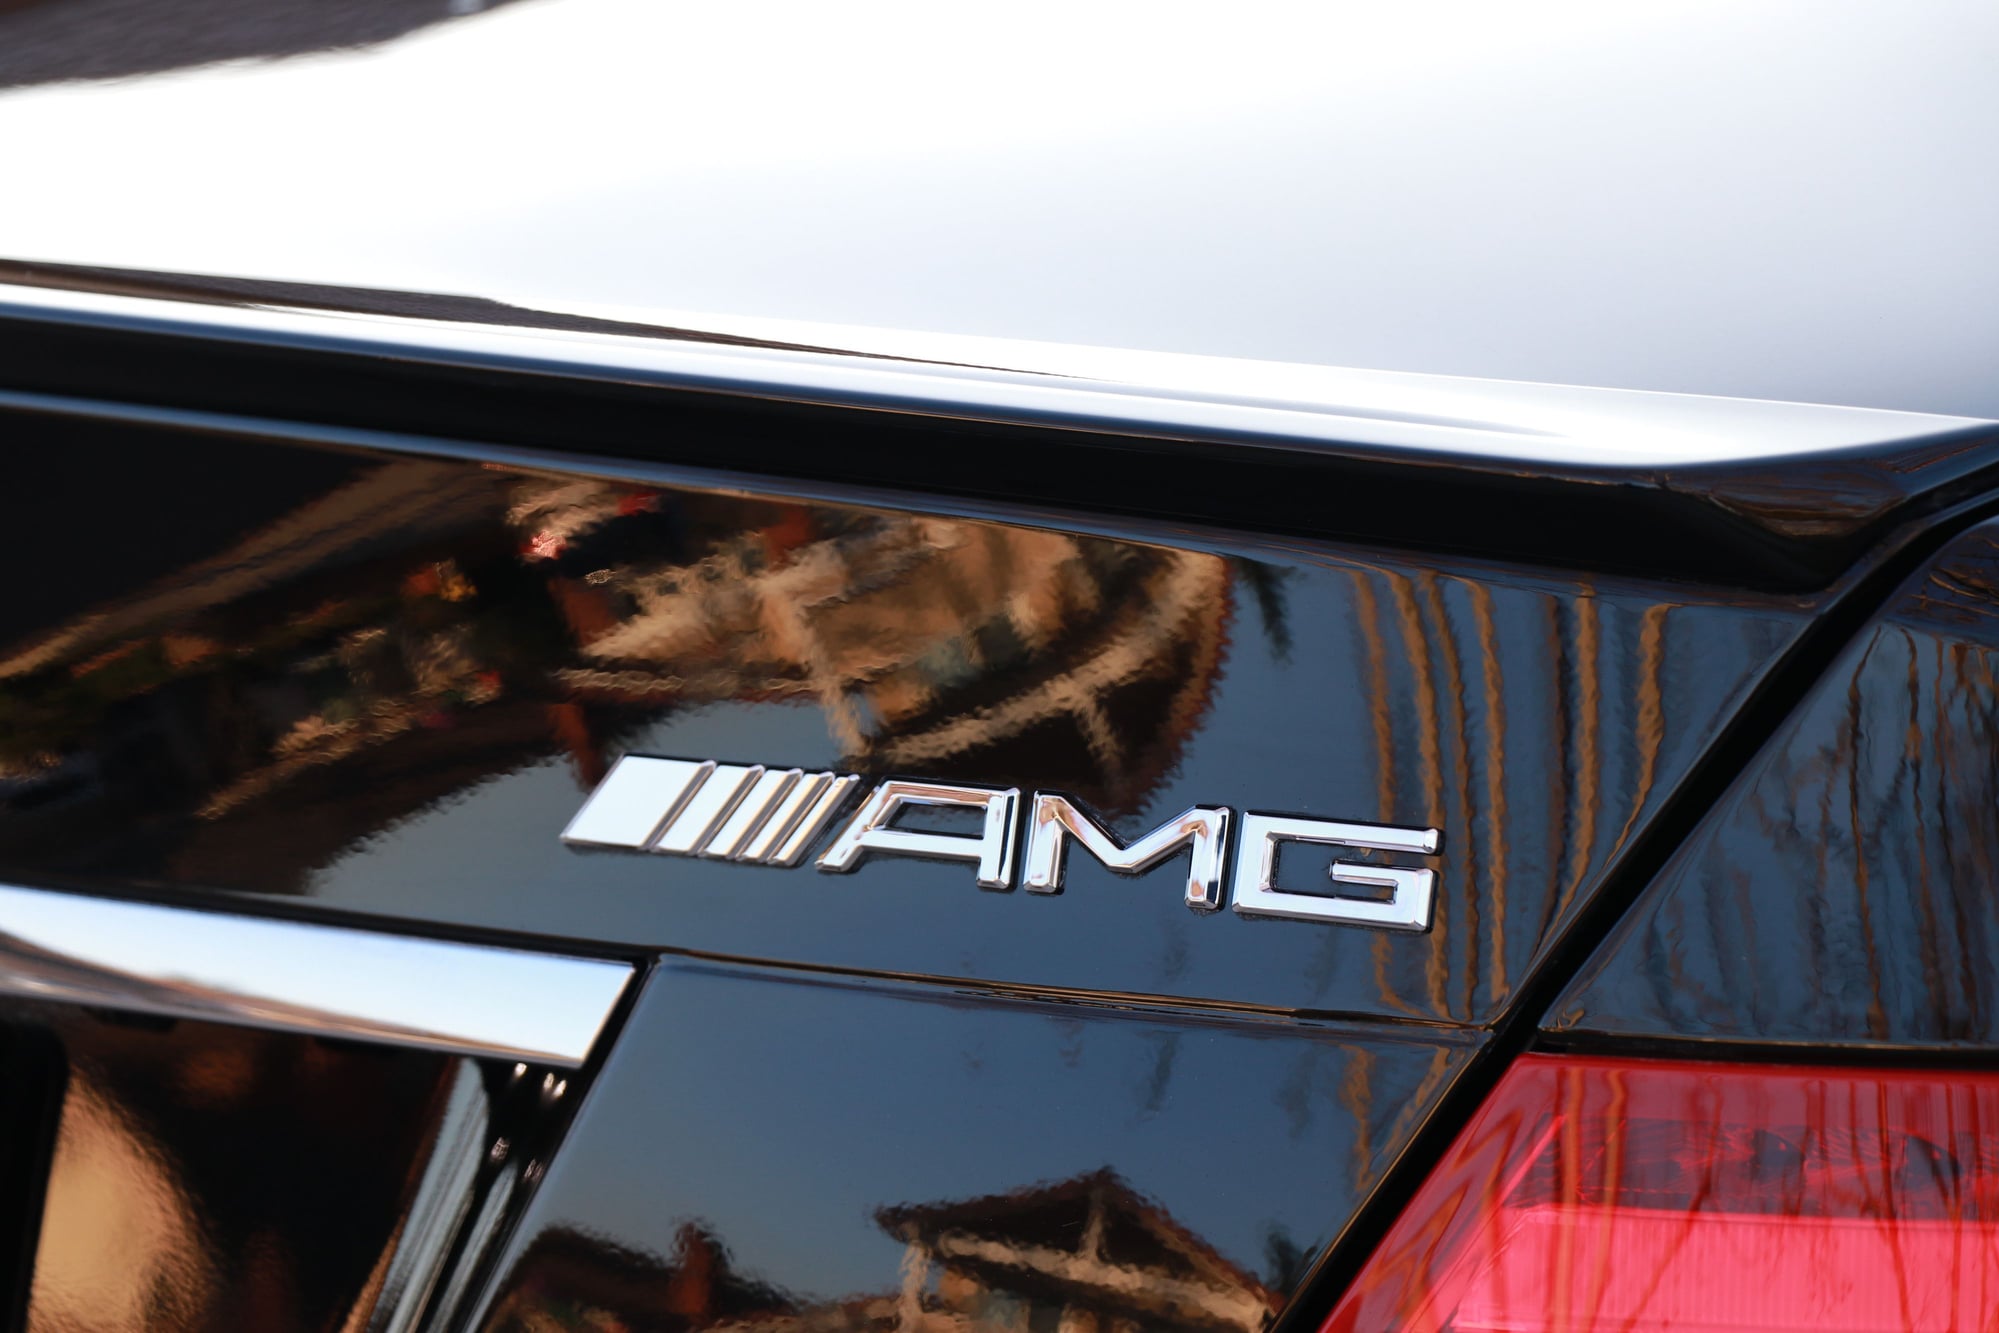 2013 Mercedes-Benz C63 AMG - 2013 Mercedes C63 AMG - Black w/ Carbon Fiber trim-  Only 14,500 miles!! - Used - VIN WDDGF7HBXDA864880 - 14,534 Miles - 8 cyl - 2WD - Automatic - Sedan - Black - Cerritos, CA 90703, United States